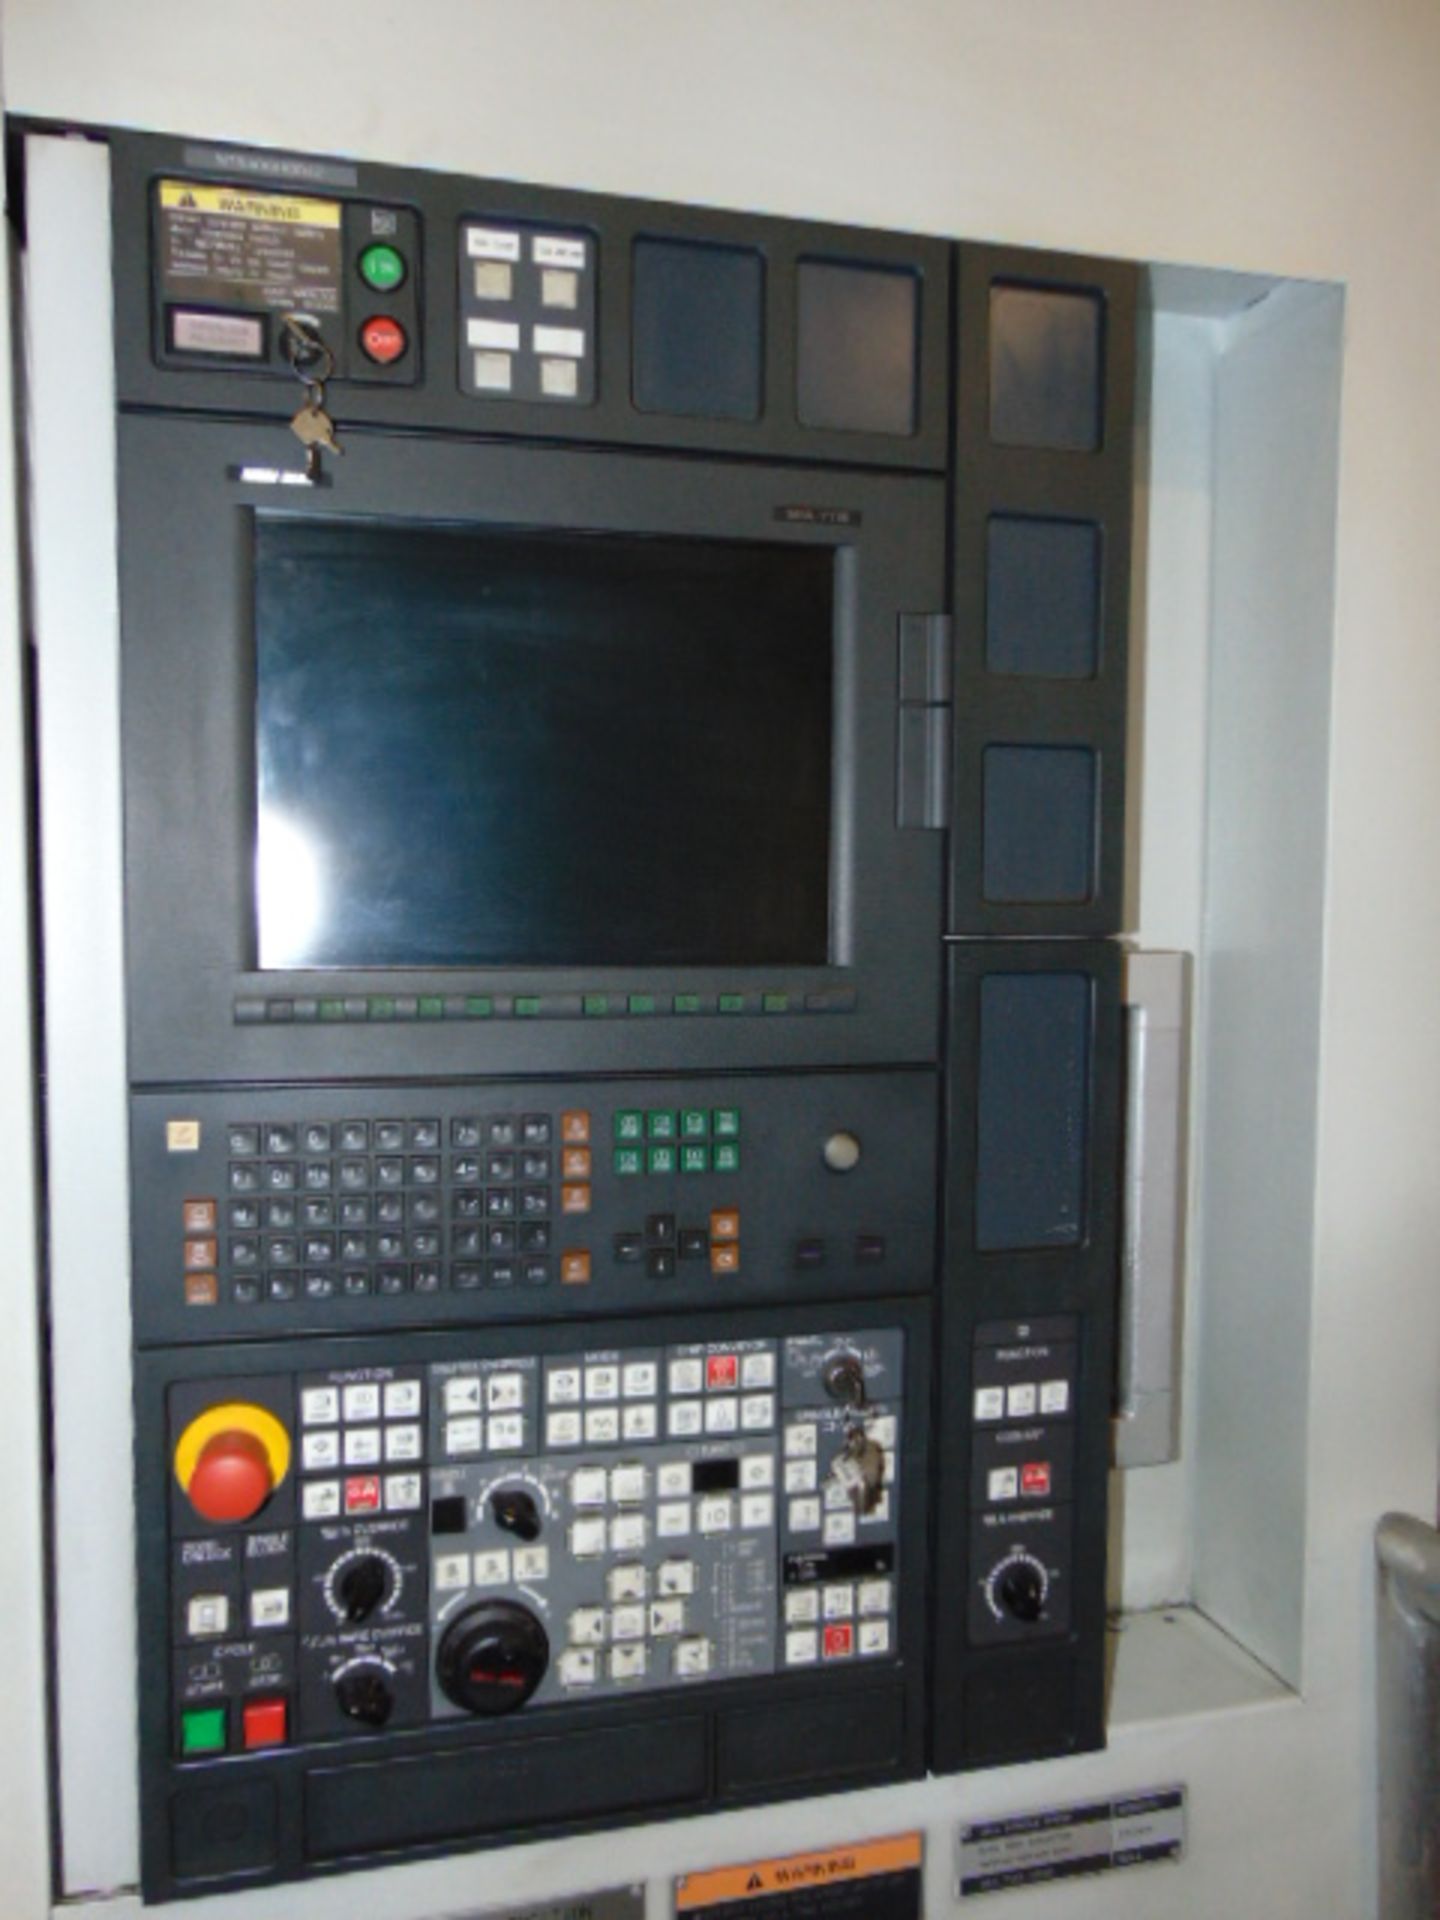 Mori Seiki NT5400 DCG/1800SZ CNC 5-Axis Horizontal Turning Center, MXS-711 III CNC control, 36.2” - Image 15 of 22